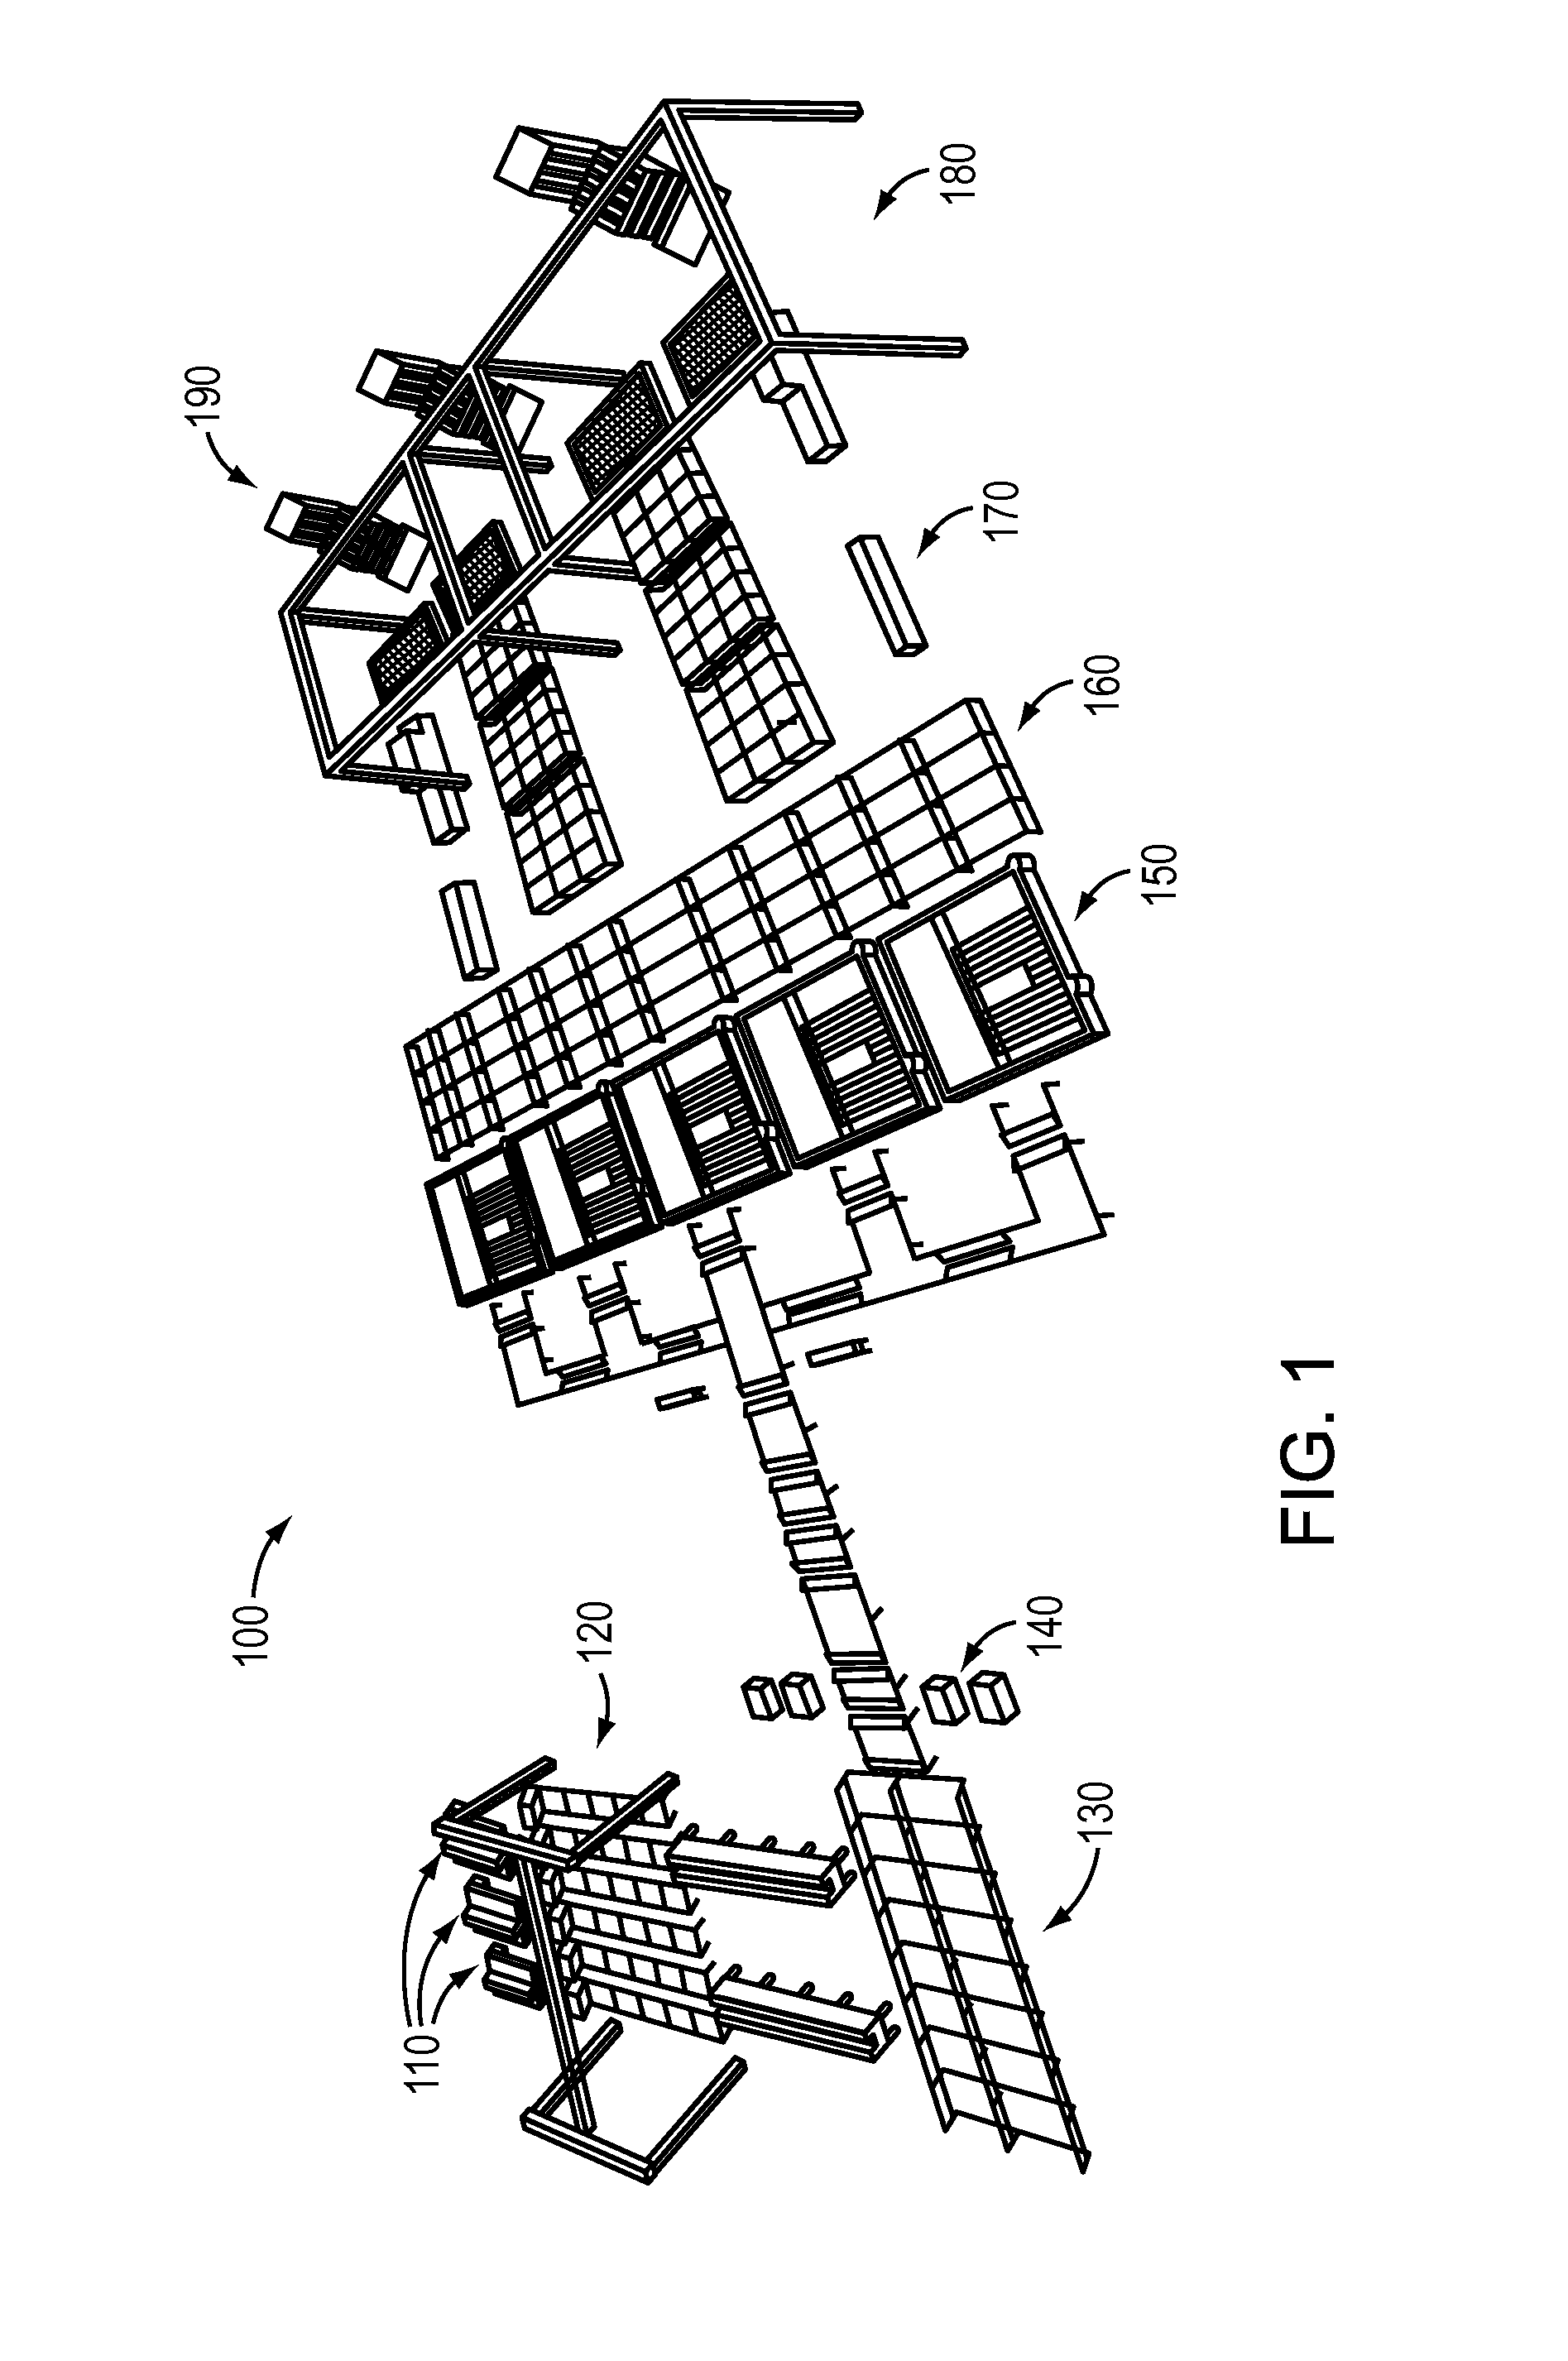 Bi-directional roller table